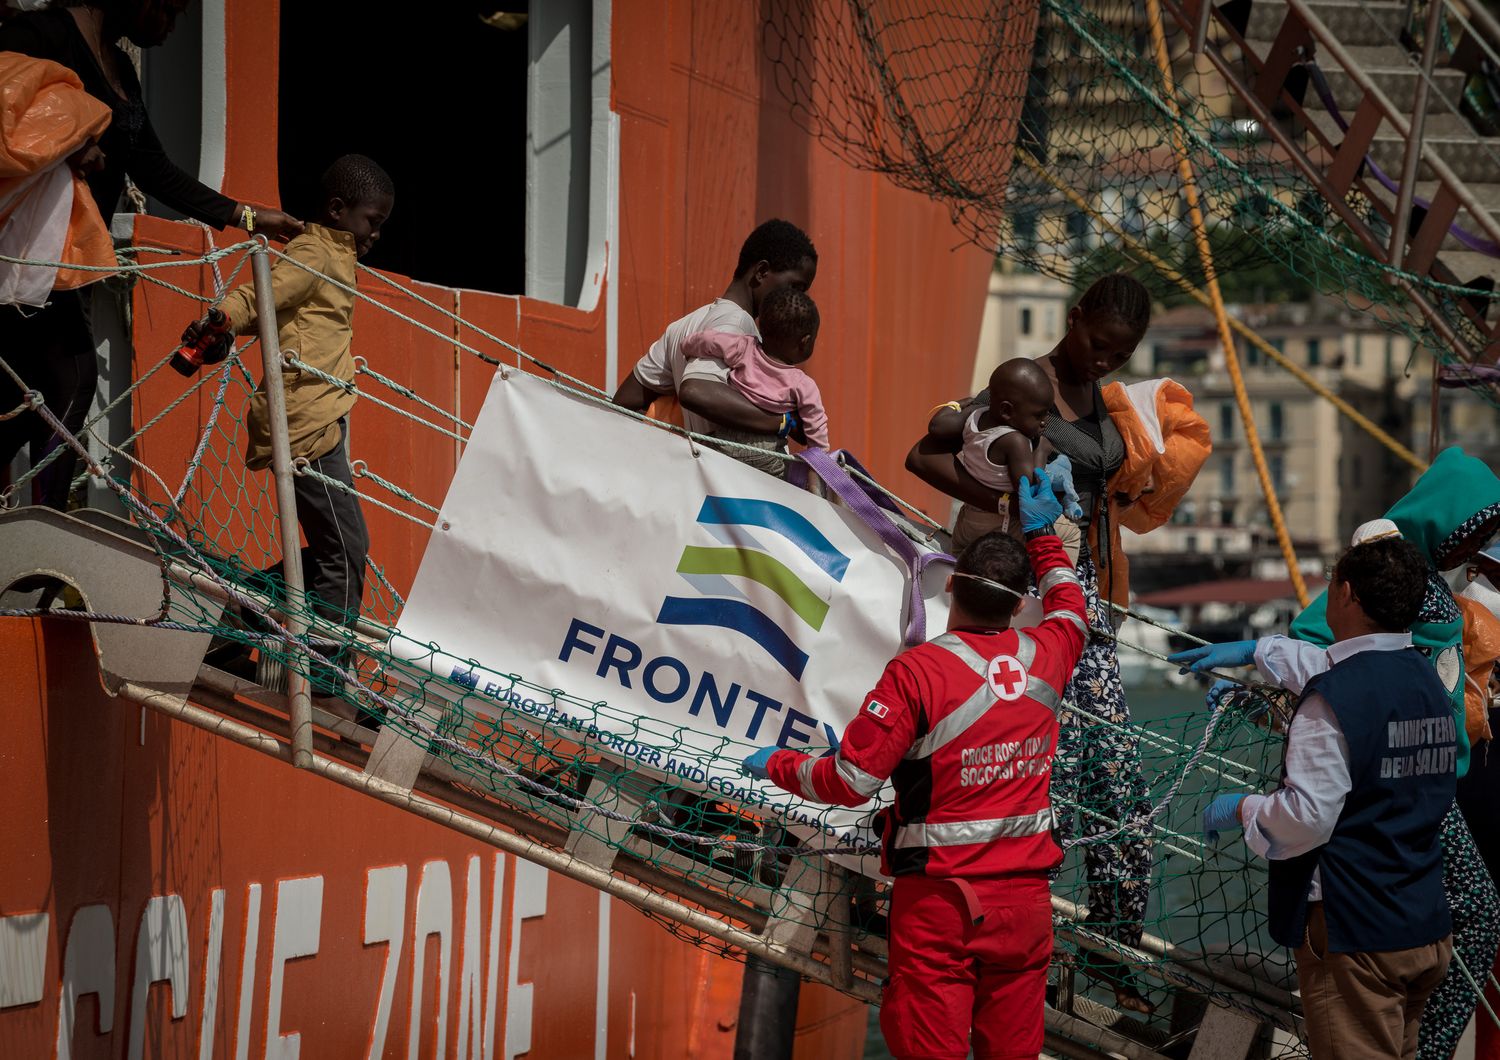 Immigrati sbarchi Frontex (foto Agf)